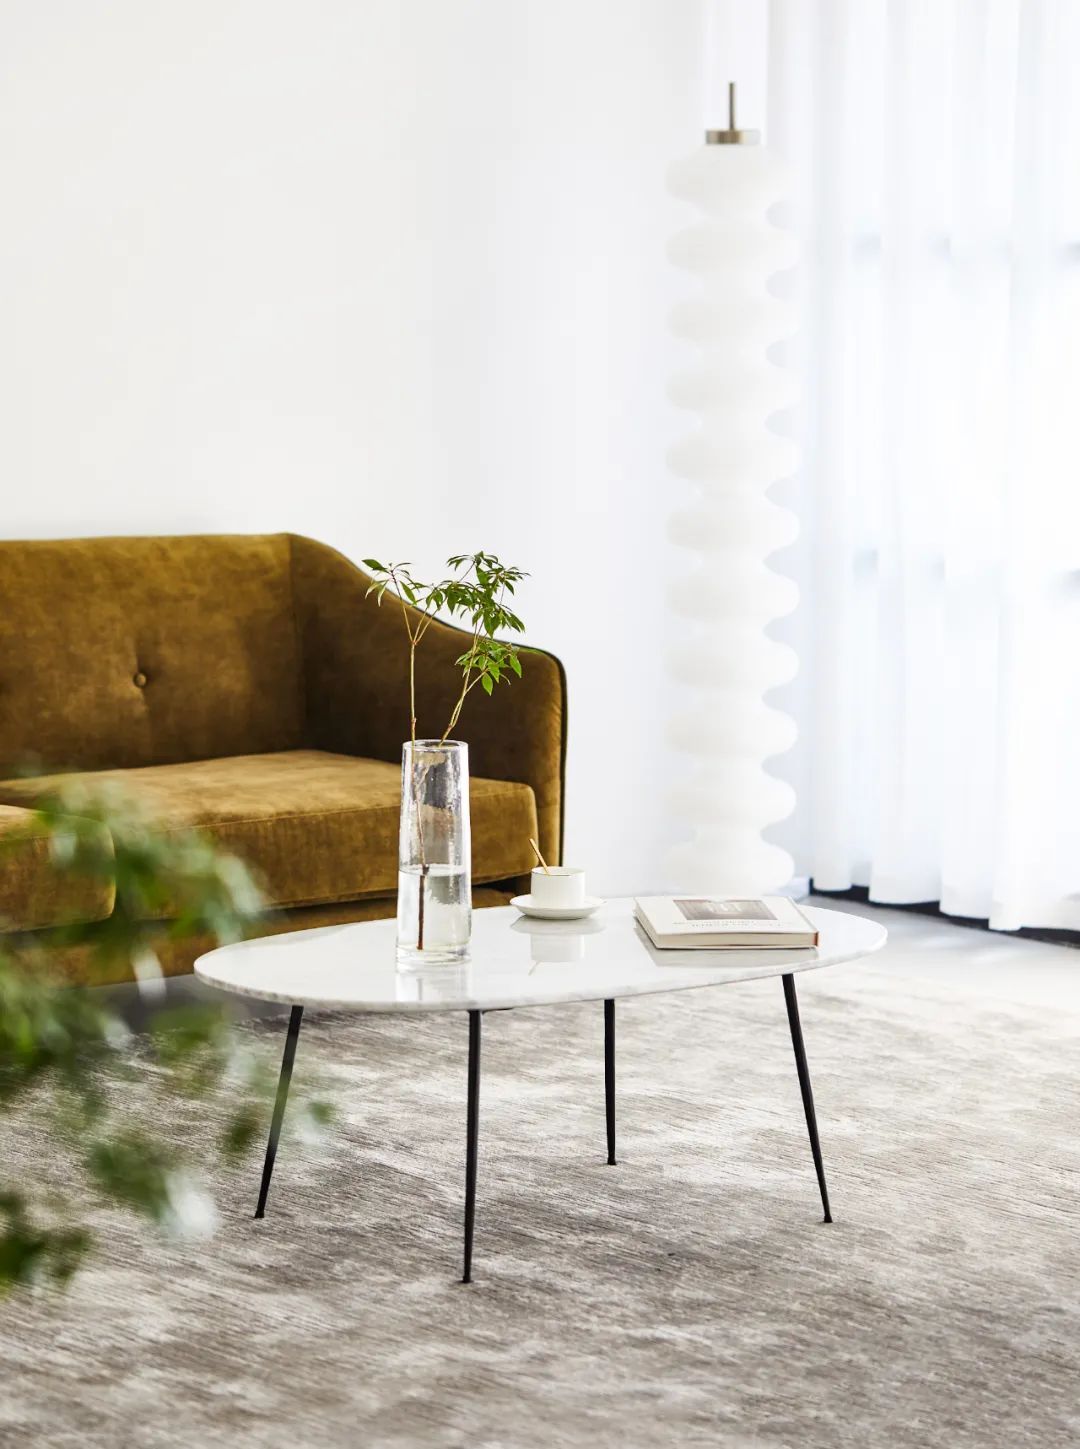 MORNINGSUN | The versatile Mona coffee table in the living room